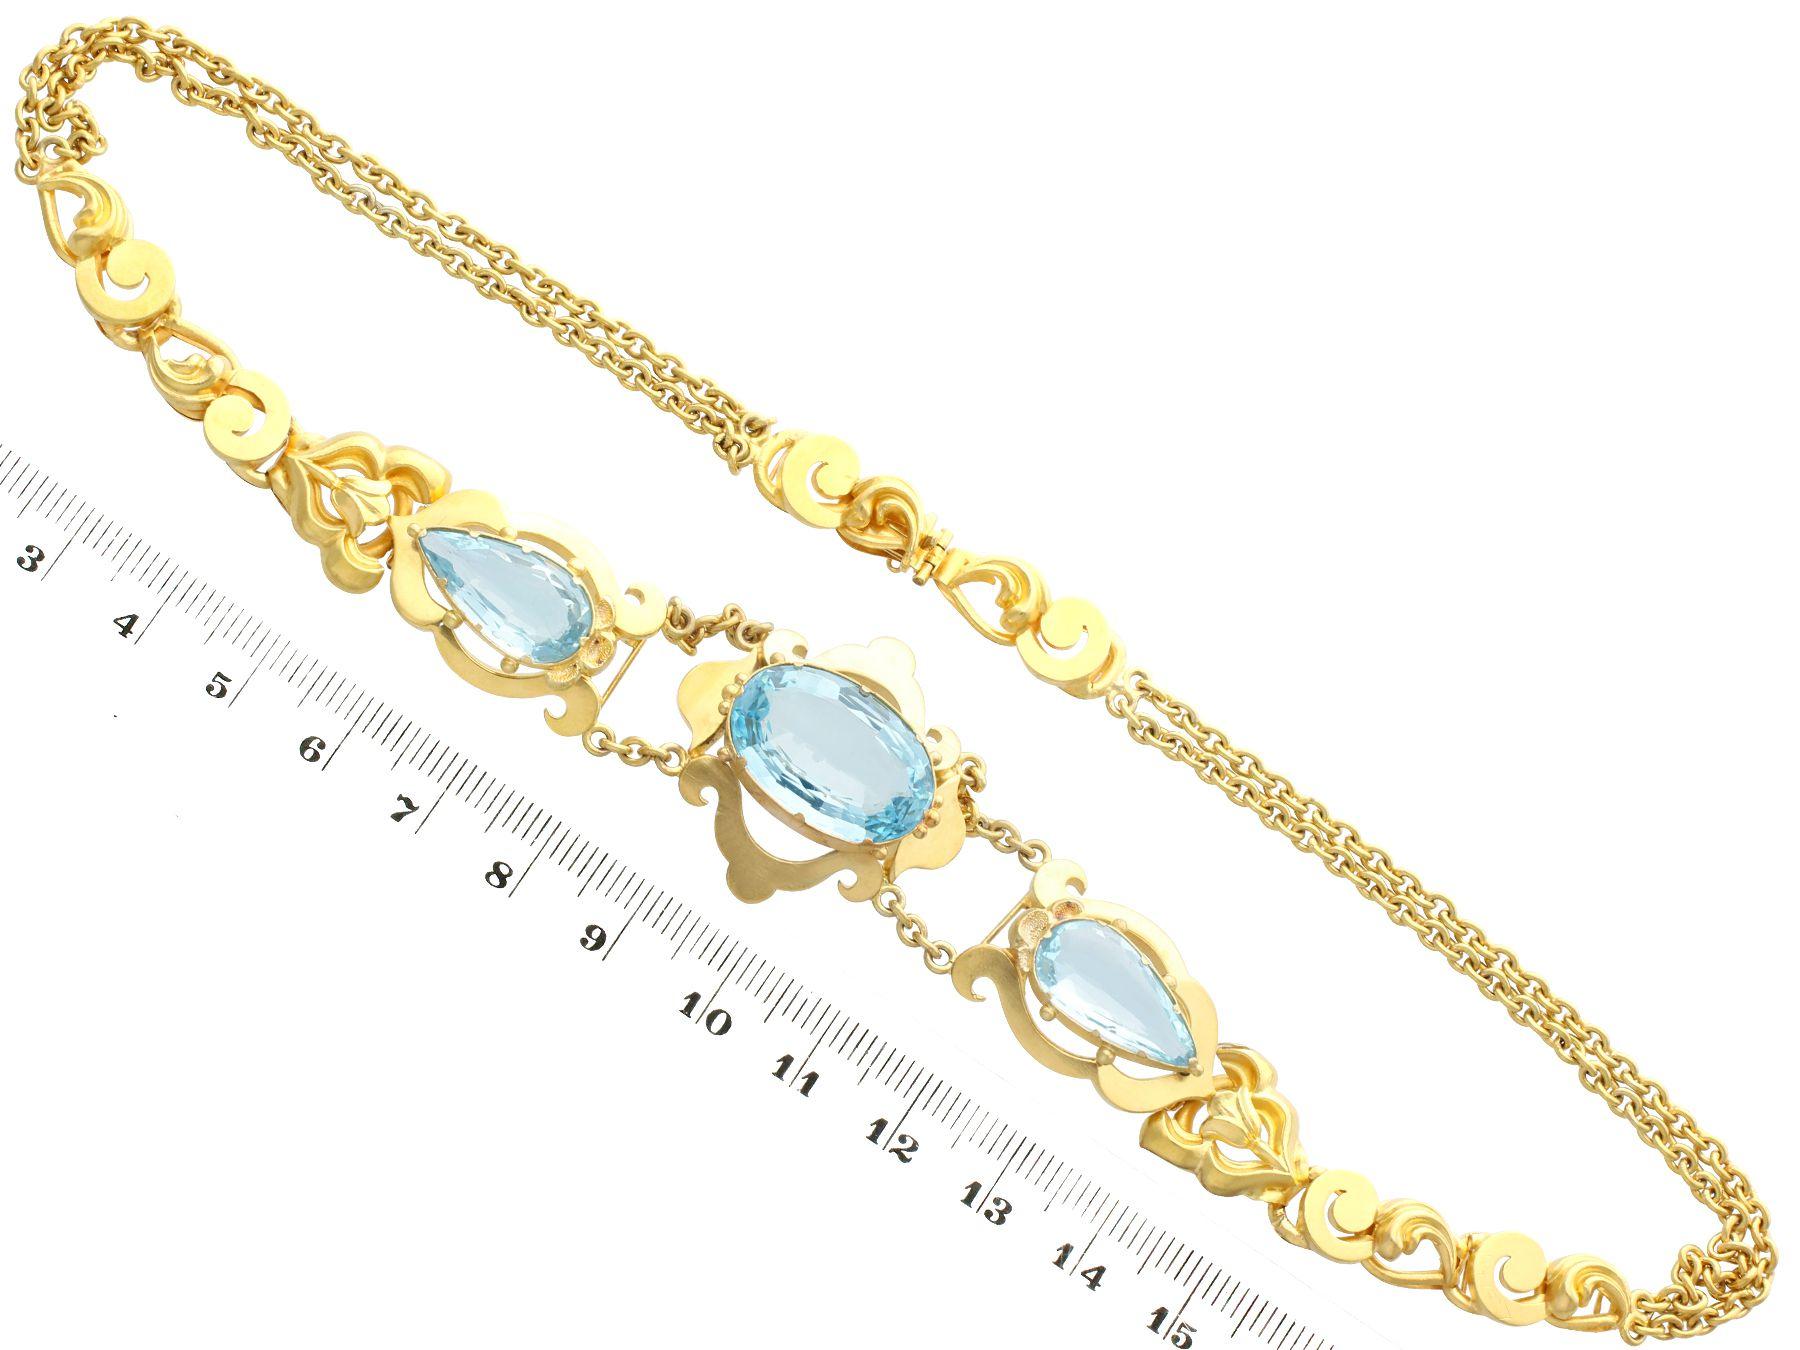 Antique 23.72ct Aquamarine and Yellow Gold Necklace Circa 1850 1